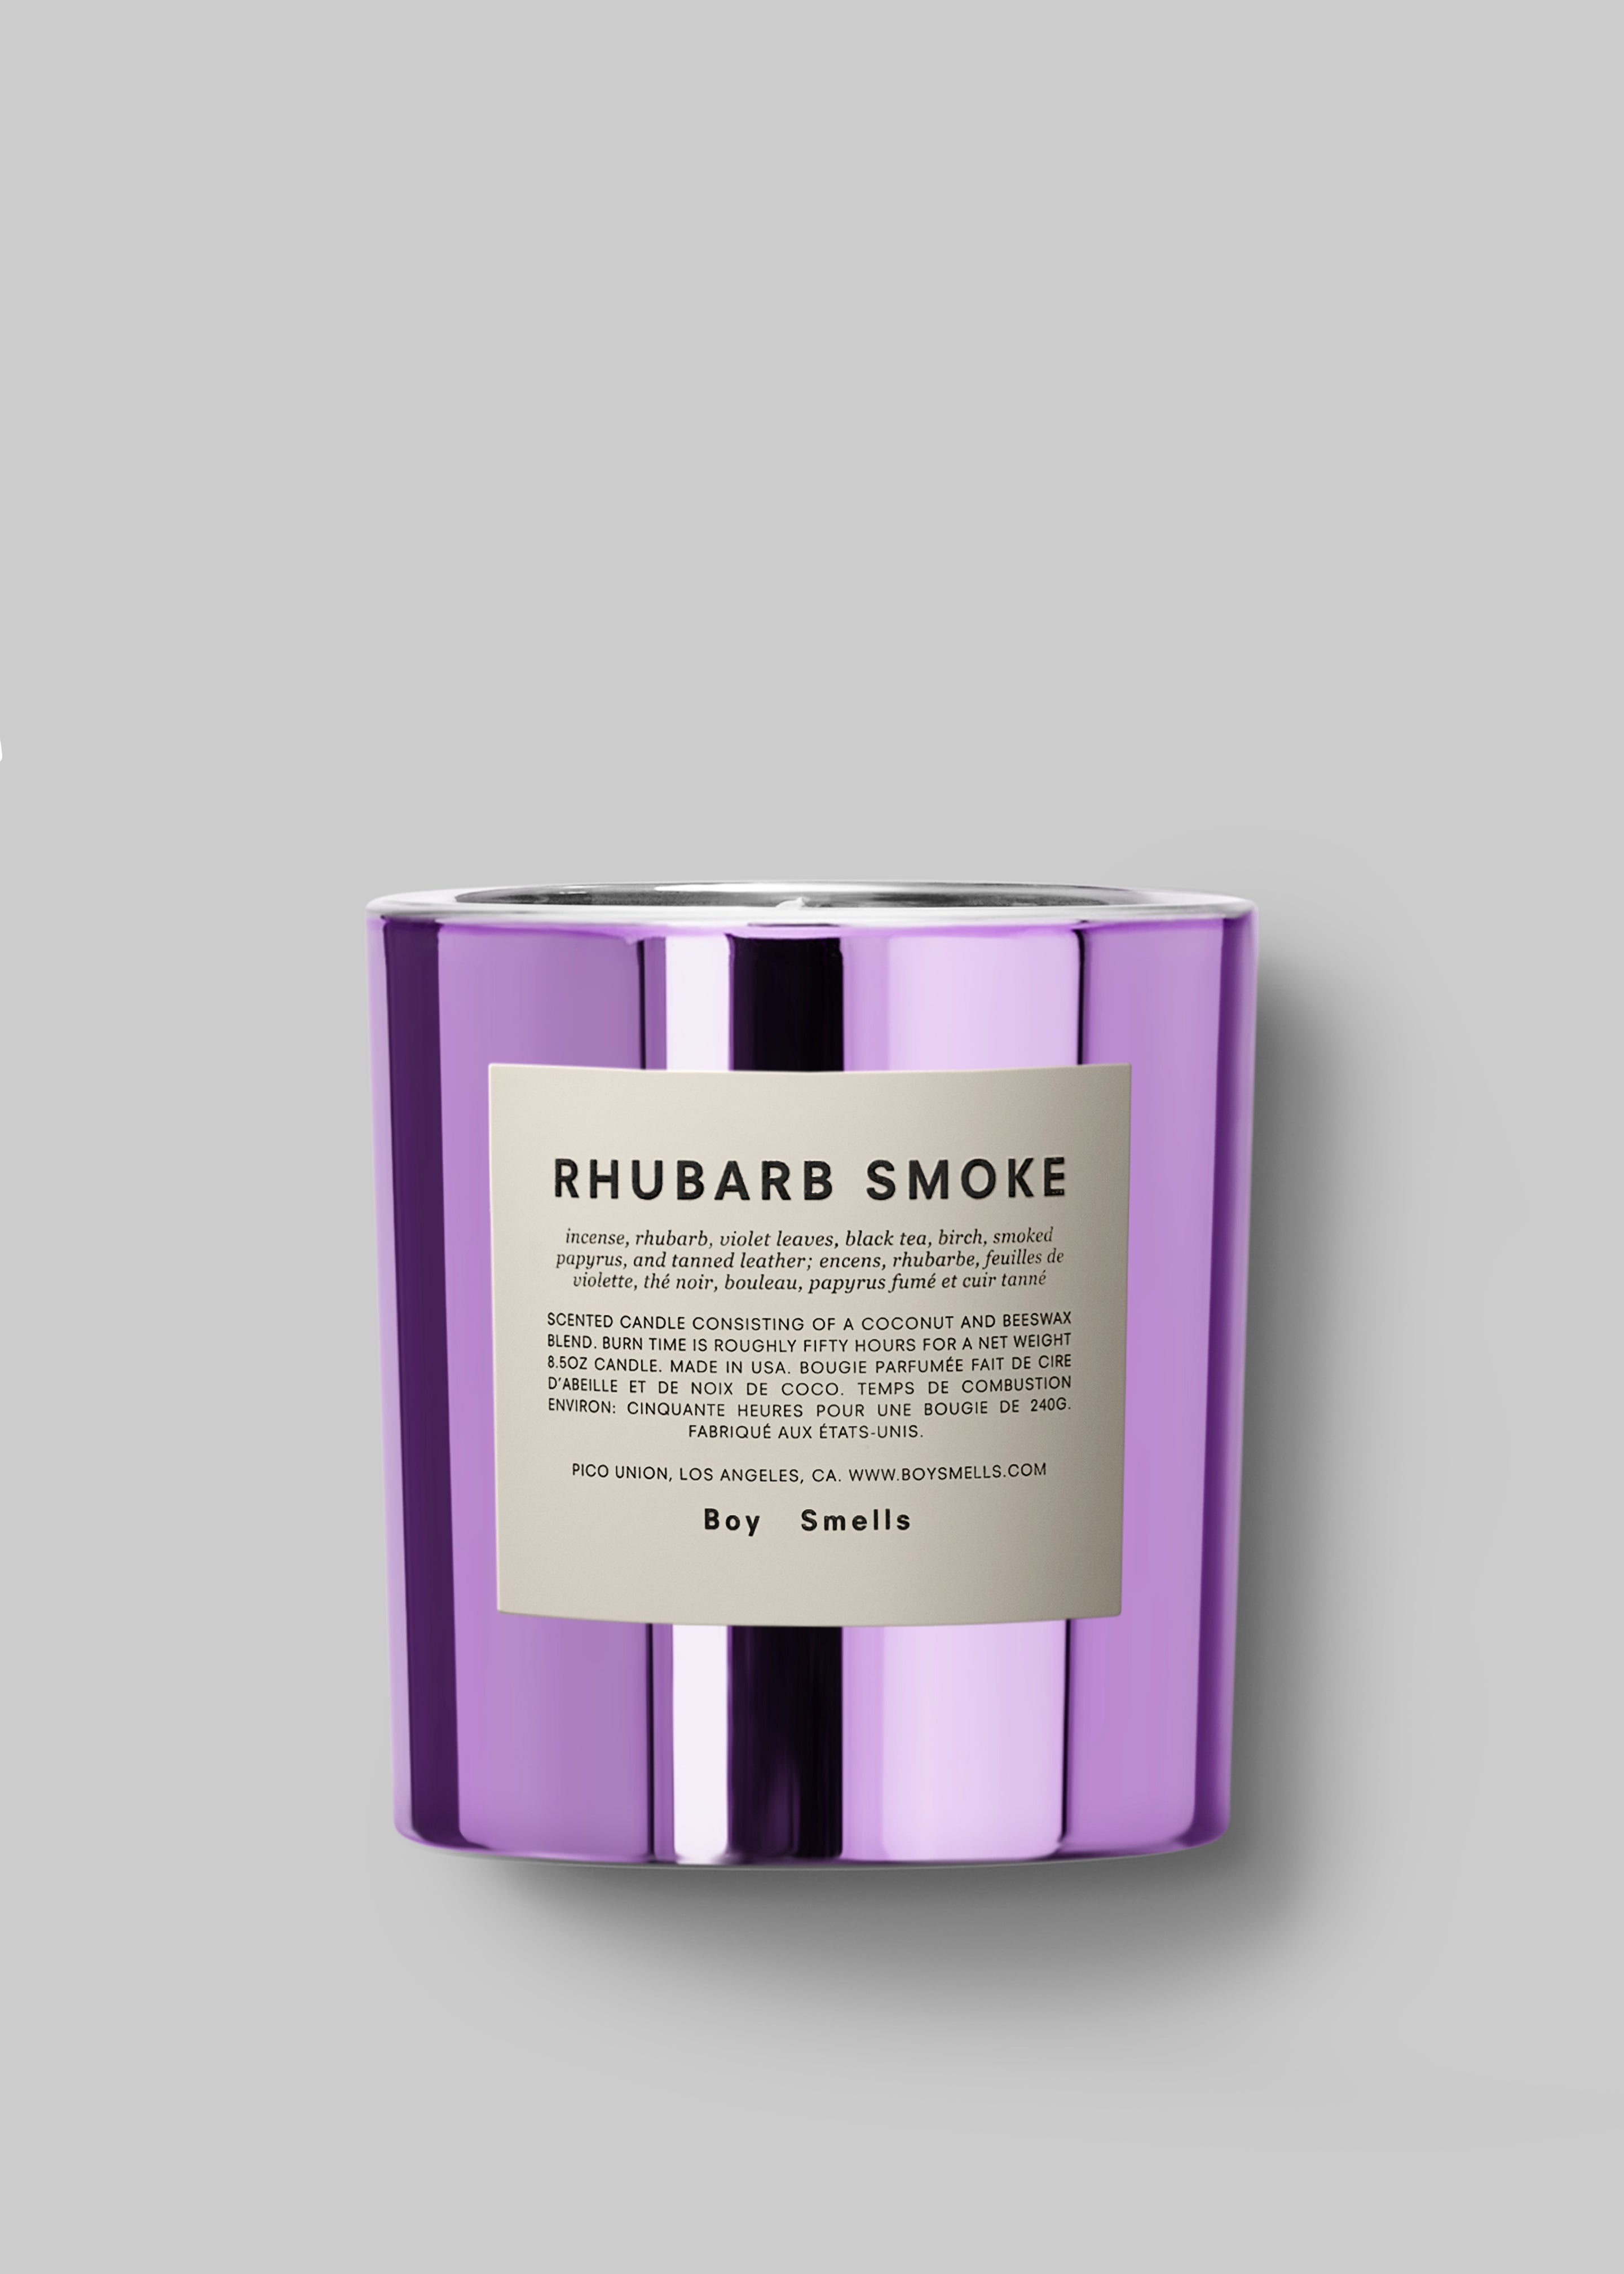 Boy Smells Rhubarb Smoke Candle - 1